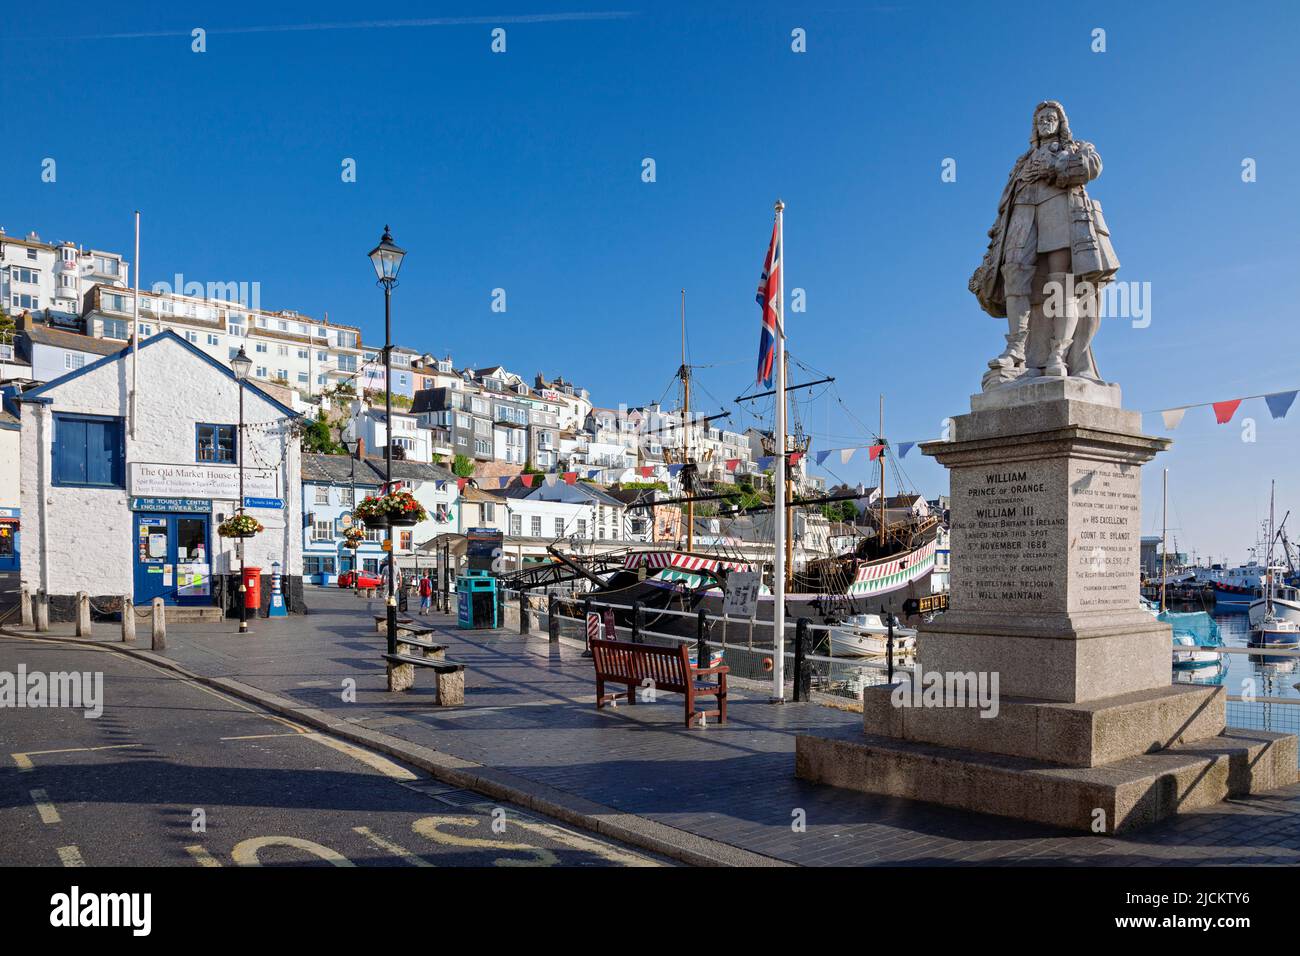 UK, England, Devon, Torbay, Brixham, The Quay with Monument to Prince William of Orange (William III of England) Stock Photo